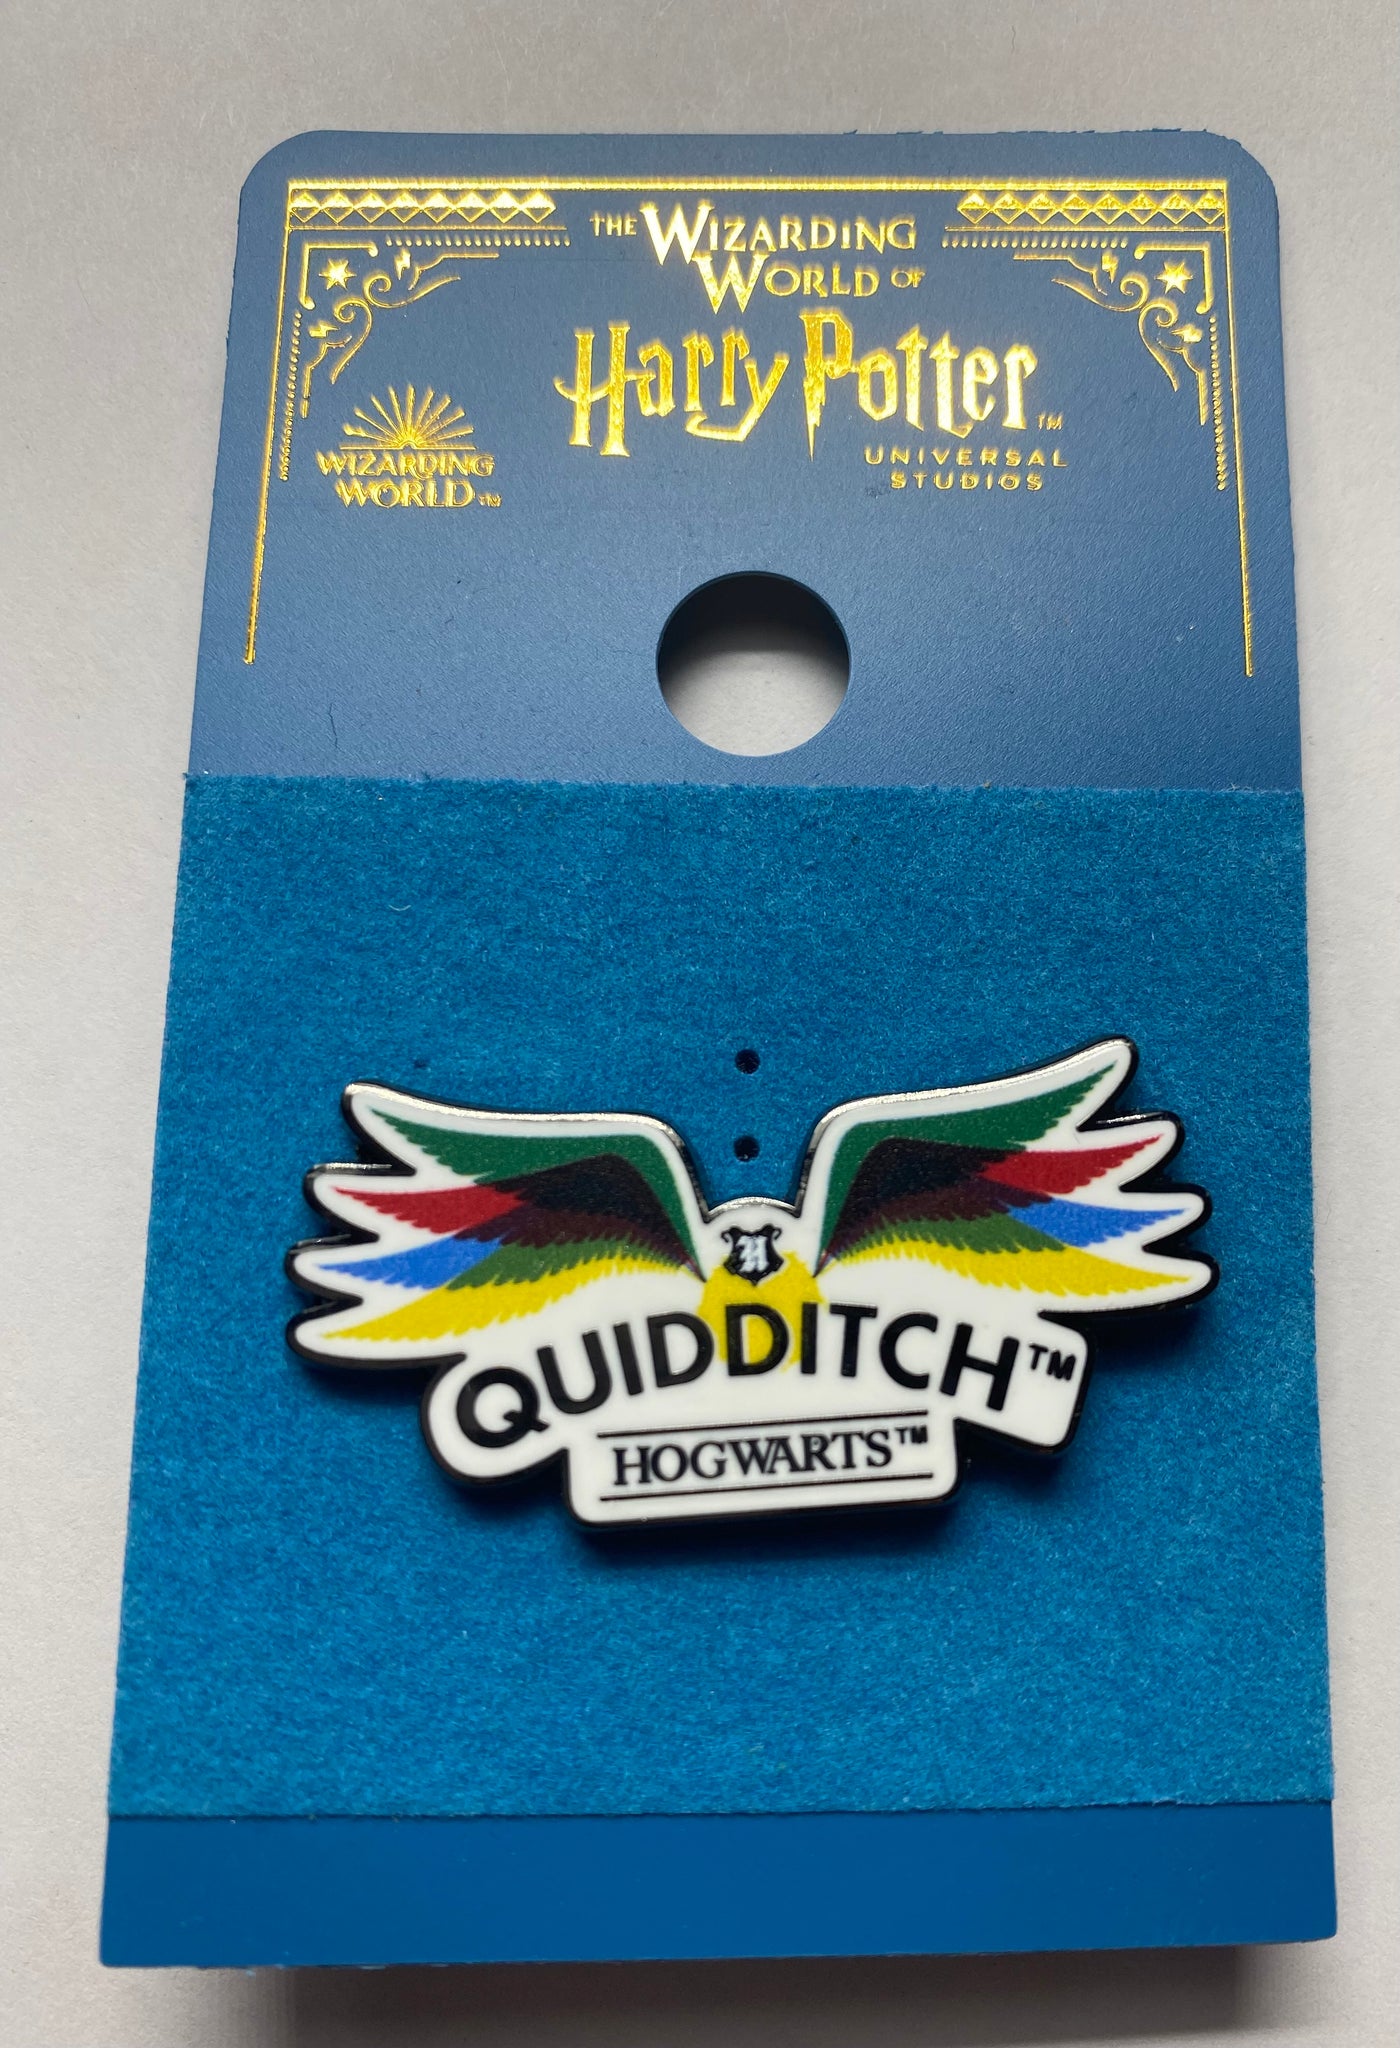 Universal Studios Wizarding World Harry Potter Quidditch Hogwarts Pin New